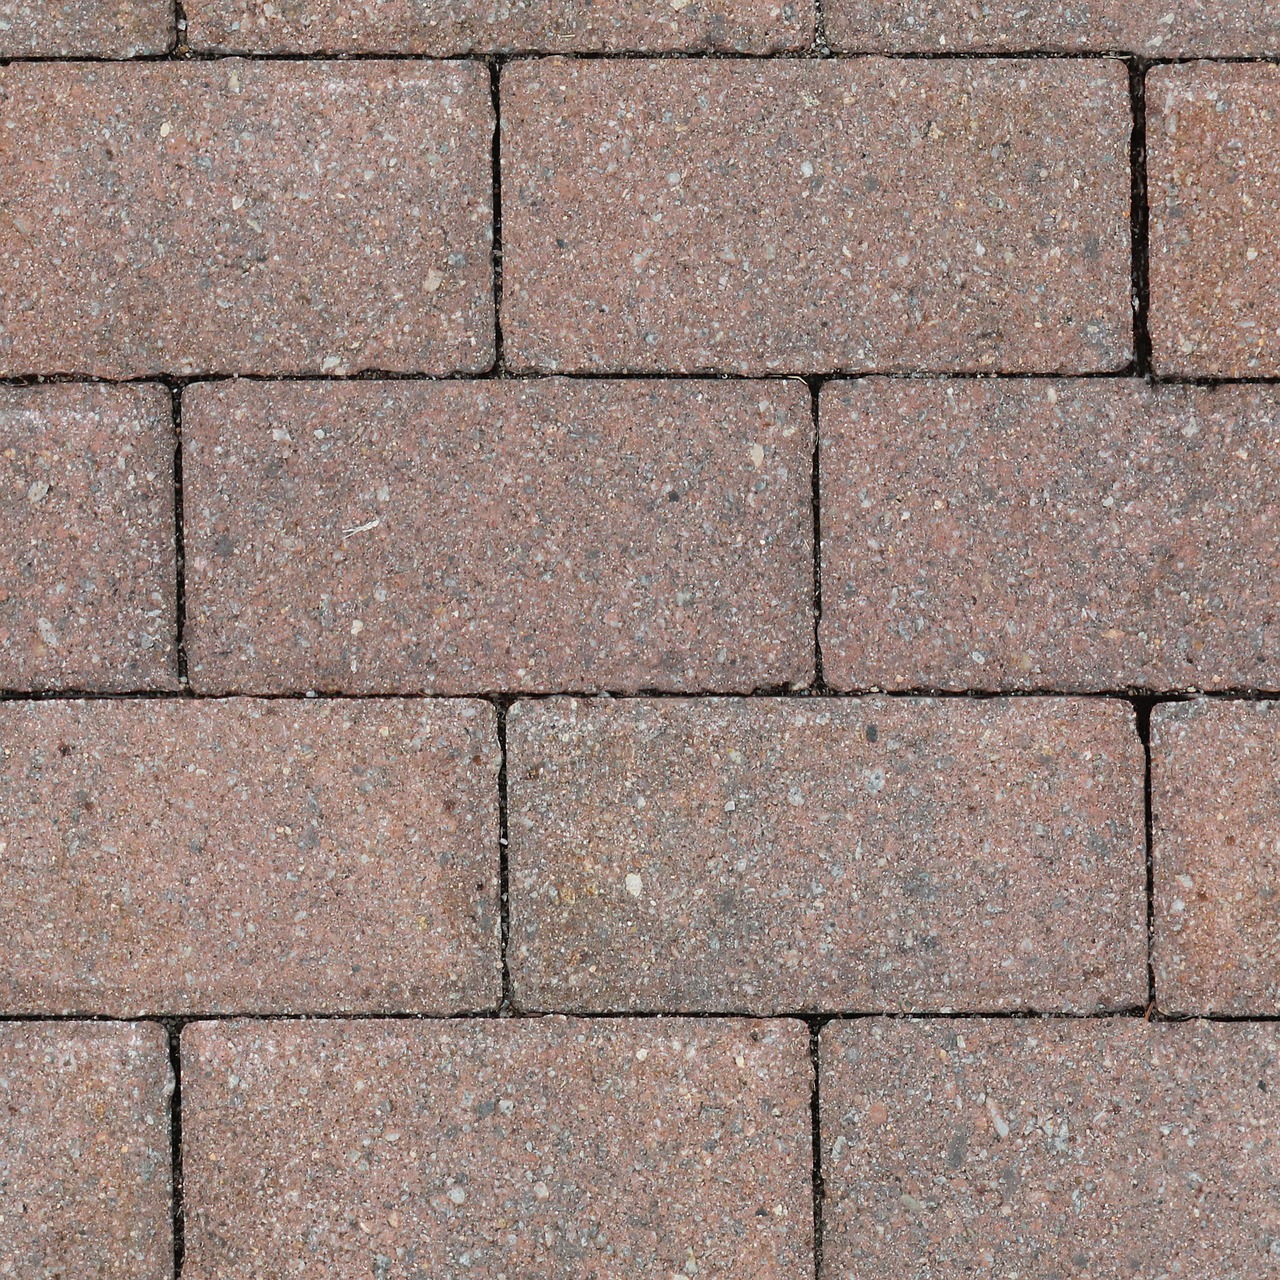 brick texture pattern free photo